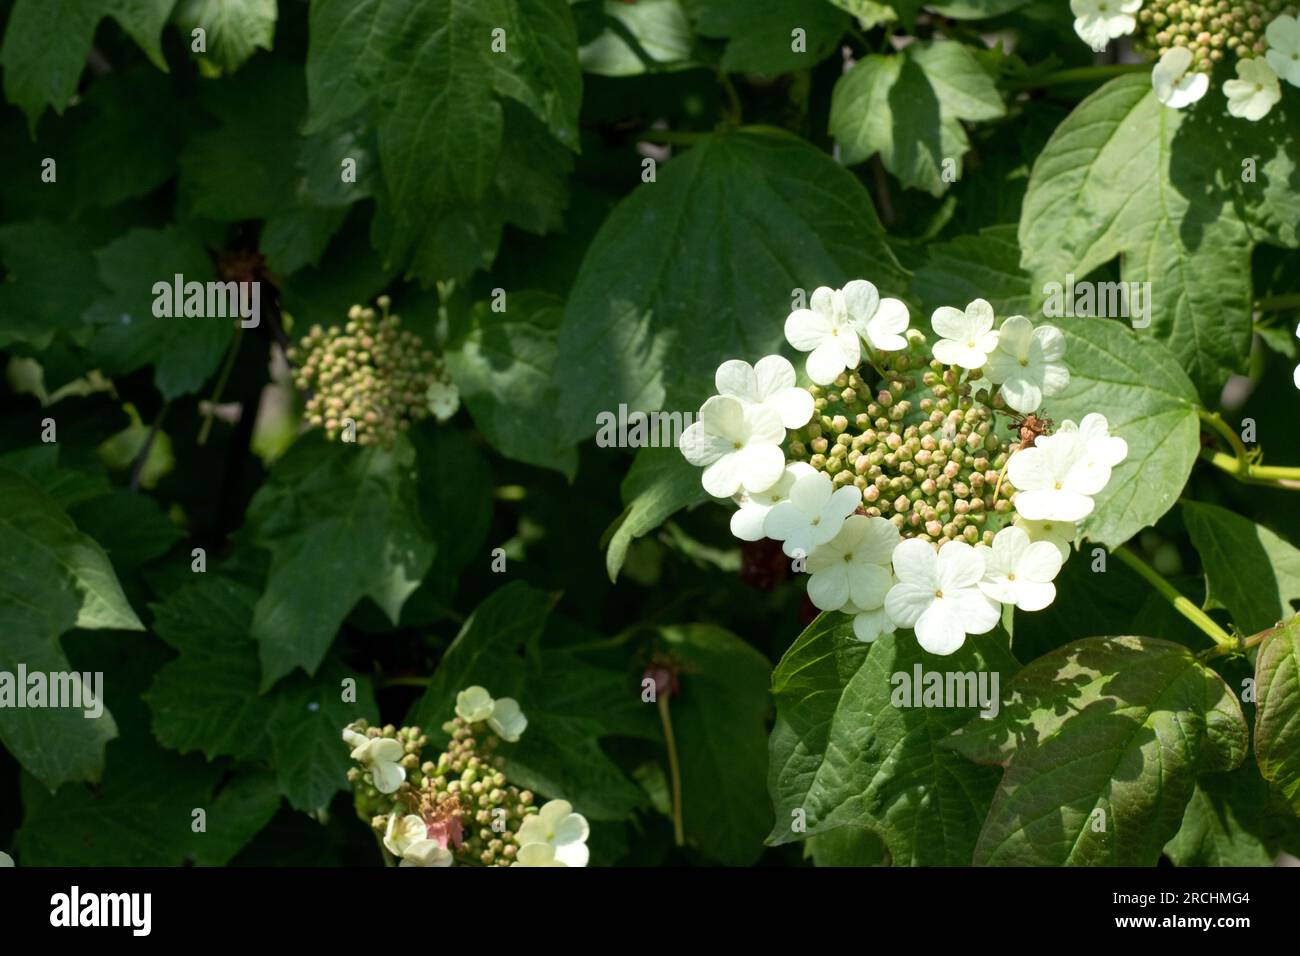 Viburnum flowers blooming beautiful photo in green summer garden close up Stock Photo